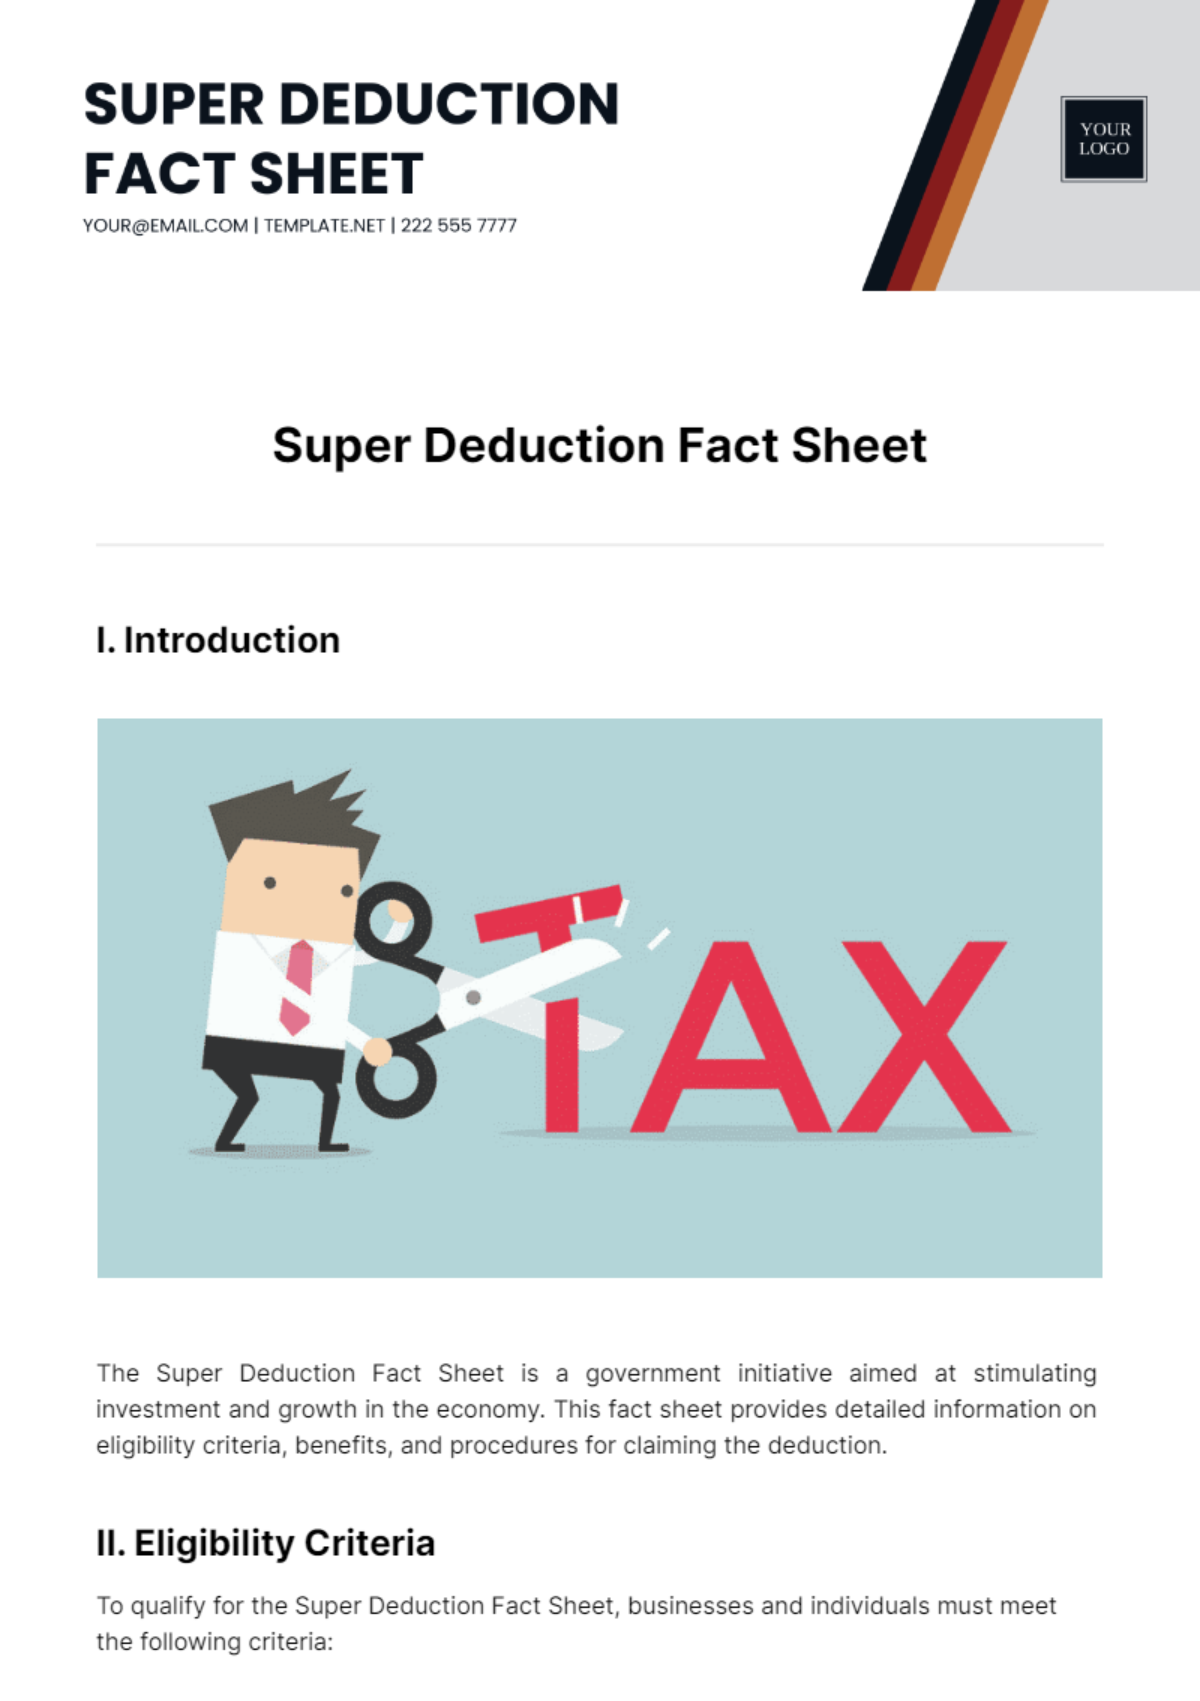 Super Deduction Fact Sheet Template